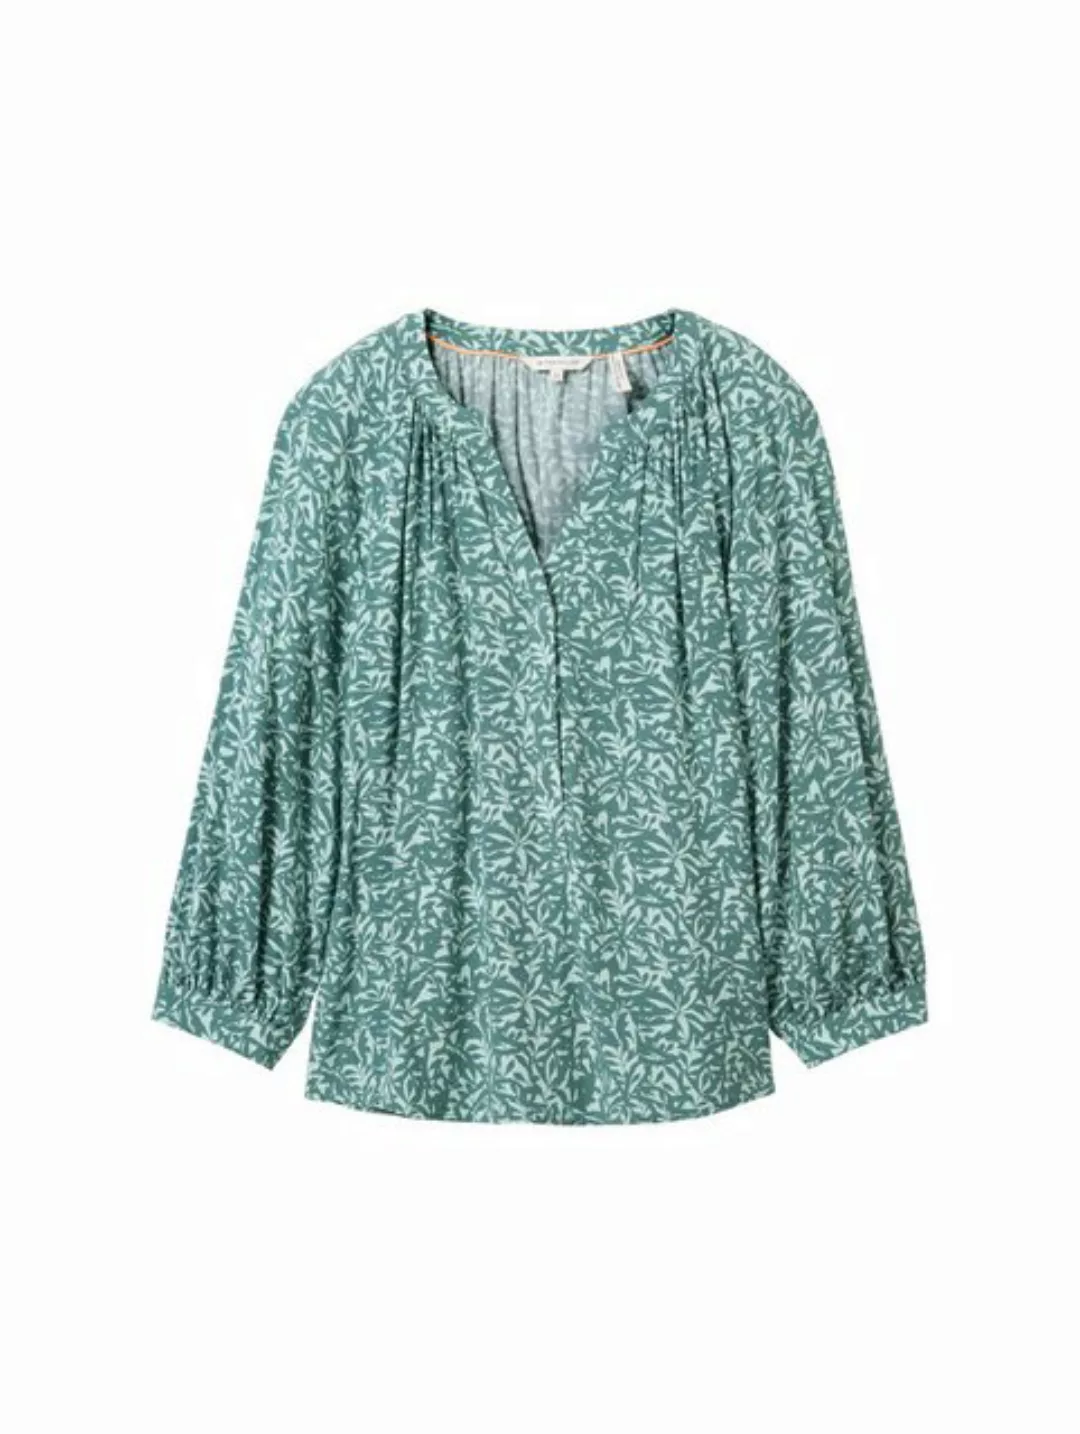 TOM TAILOR Shirtbluse feminine print blous günstig online kaufen